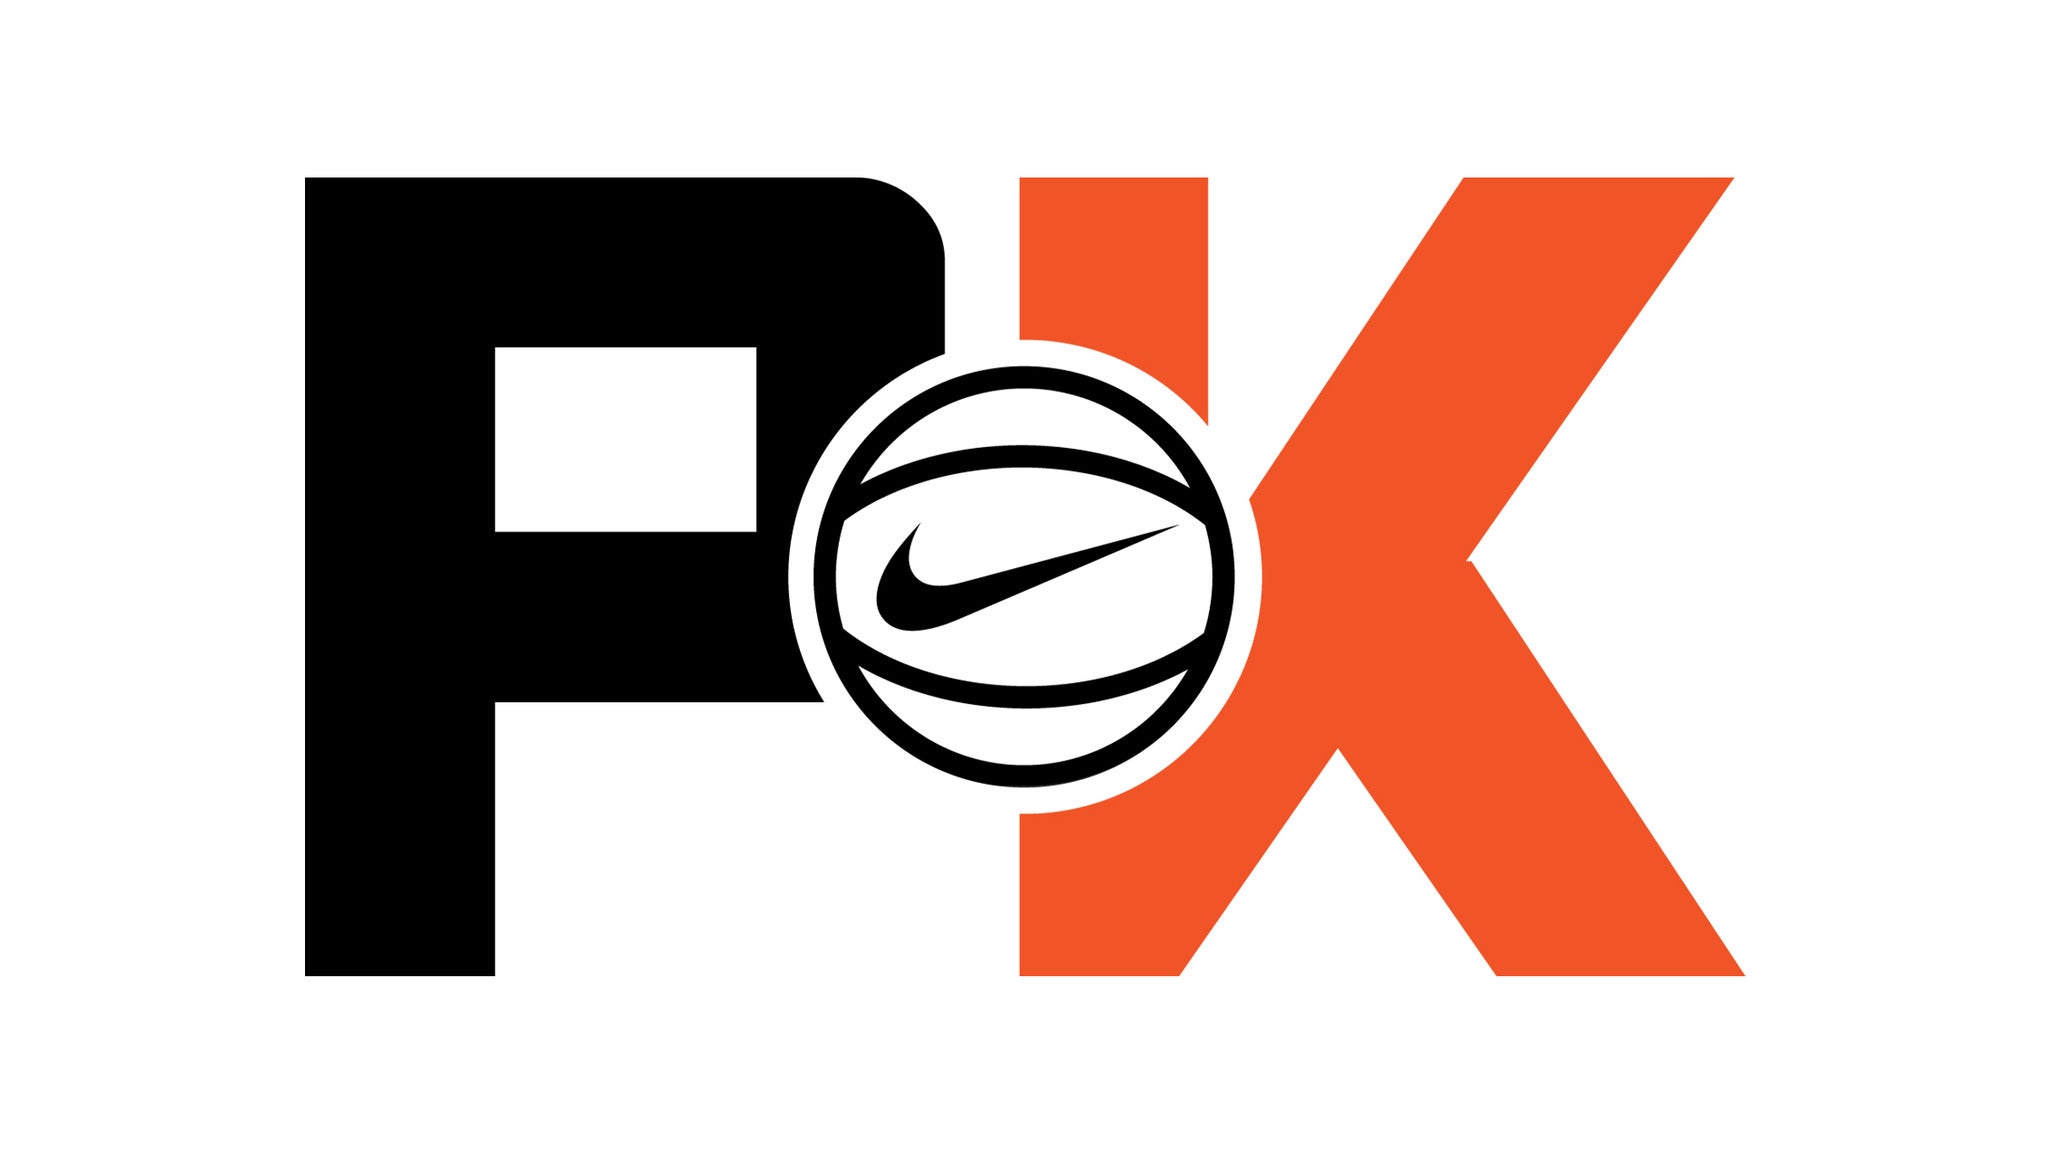 Moda Center Session F - PKI Championships Men's & Women's in Portland promo photo for Venue presale offer code